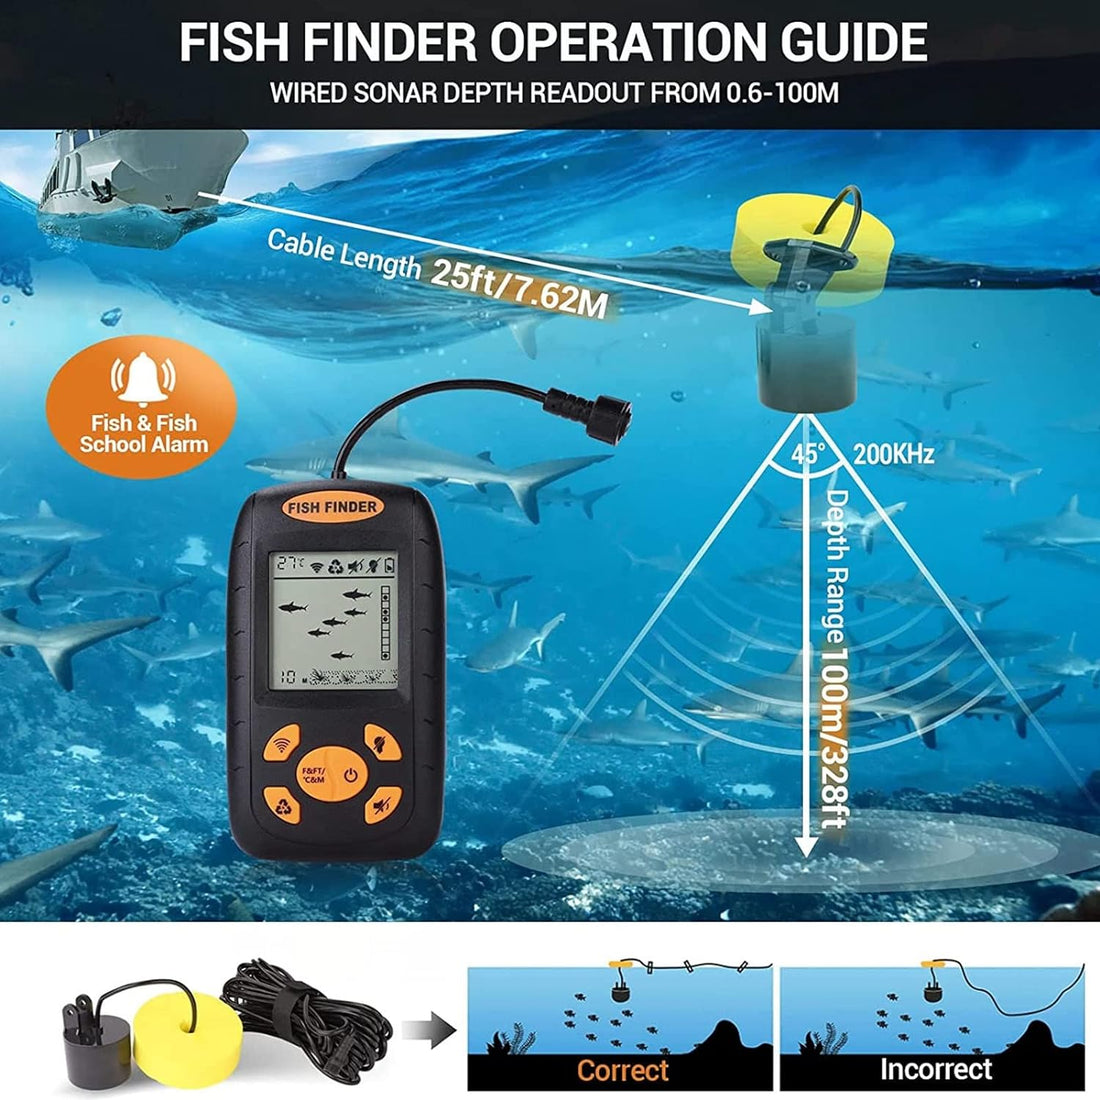 Portable Fish Finder, Handheld Fishing Fish Detector Device Shore Boat Sonar Sensor Transducer Contour Readout Fish Depth Finder with Backlight LED Display, for Boat Dock Sea Ice Kayak (Black)